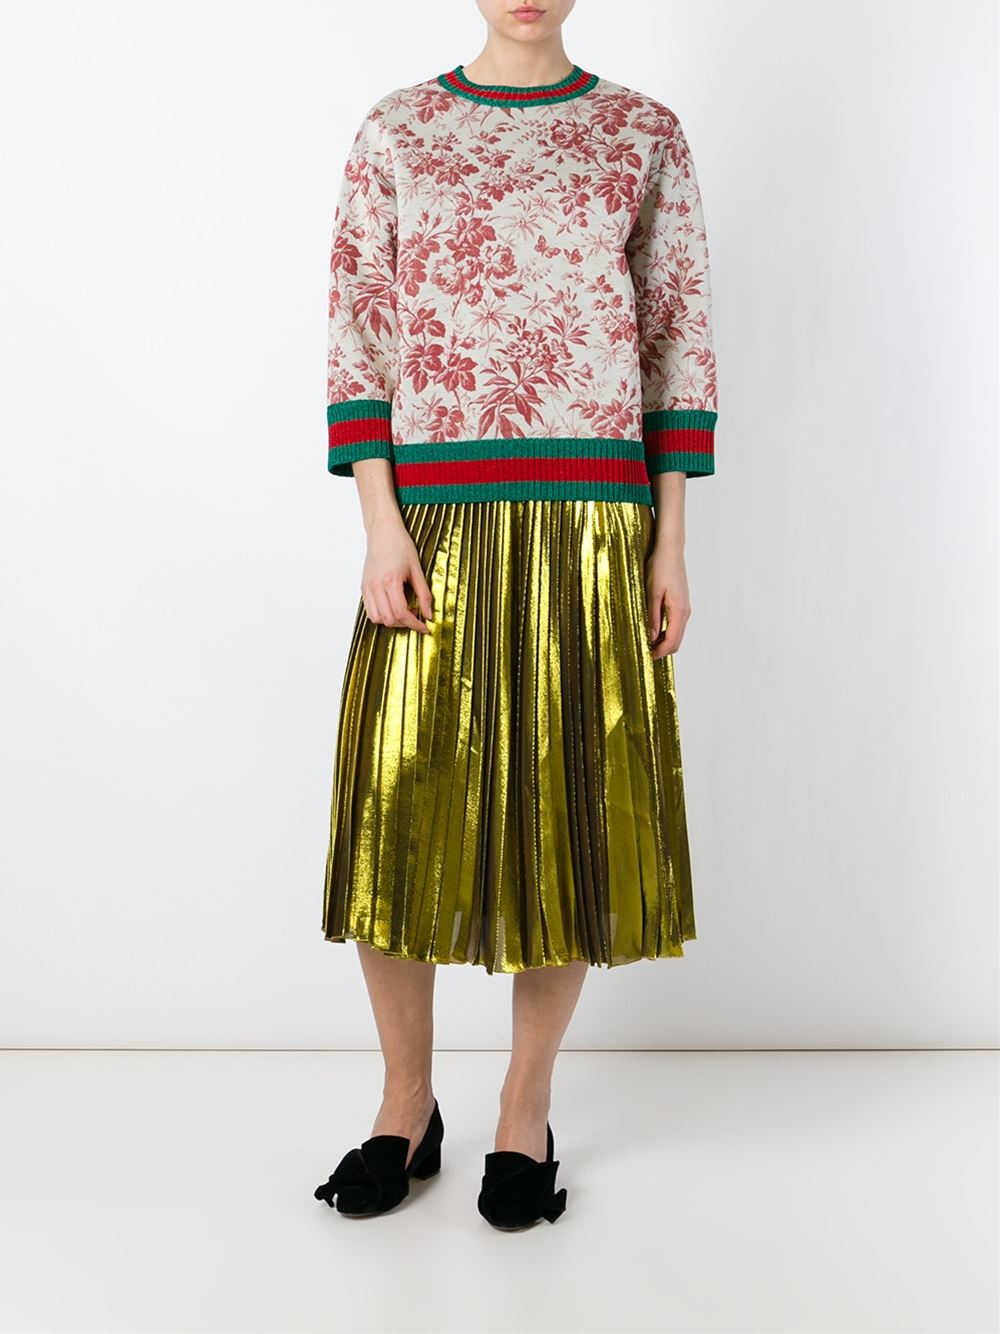 Lyst - Gucci Floral-print Neoprene Sweatshirt for Men